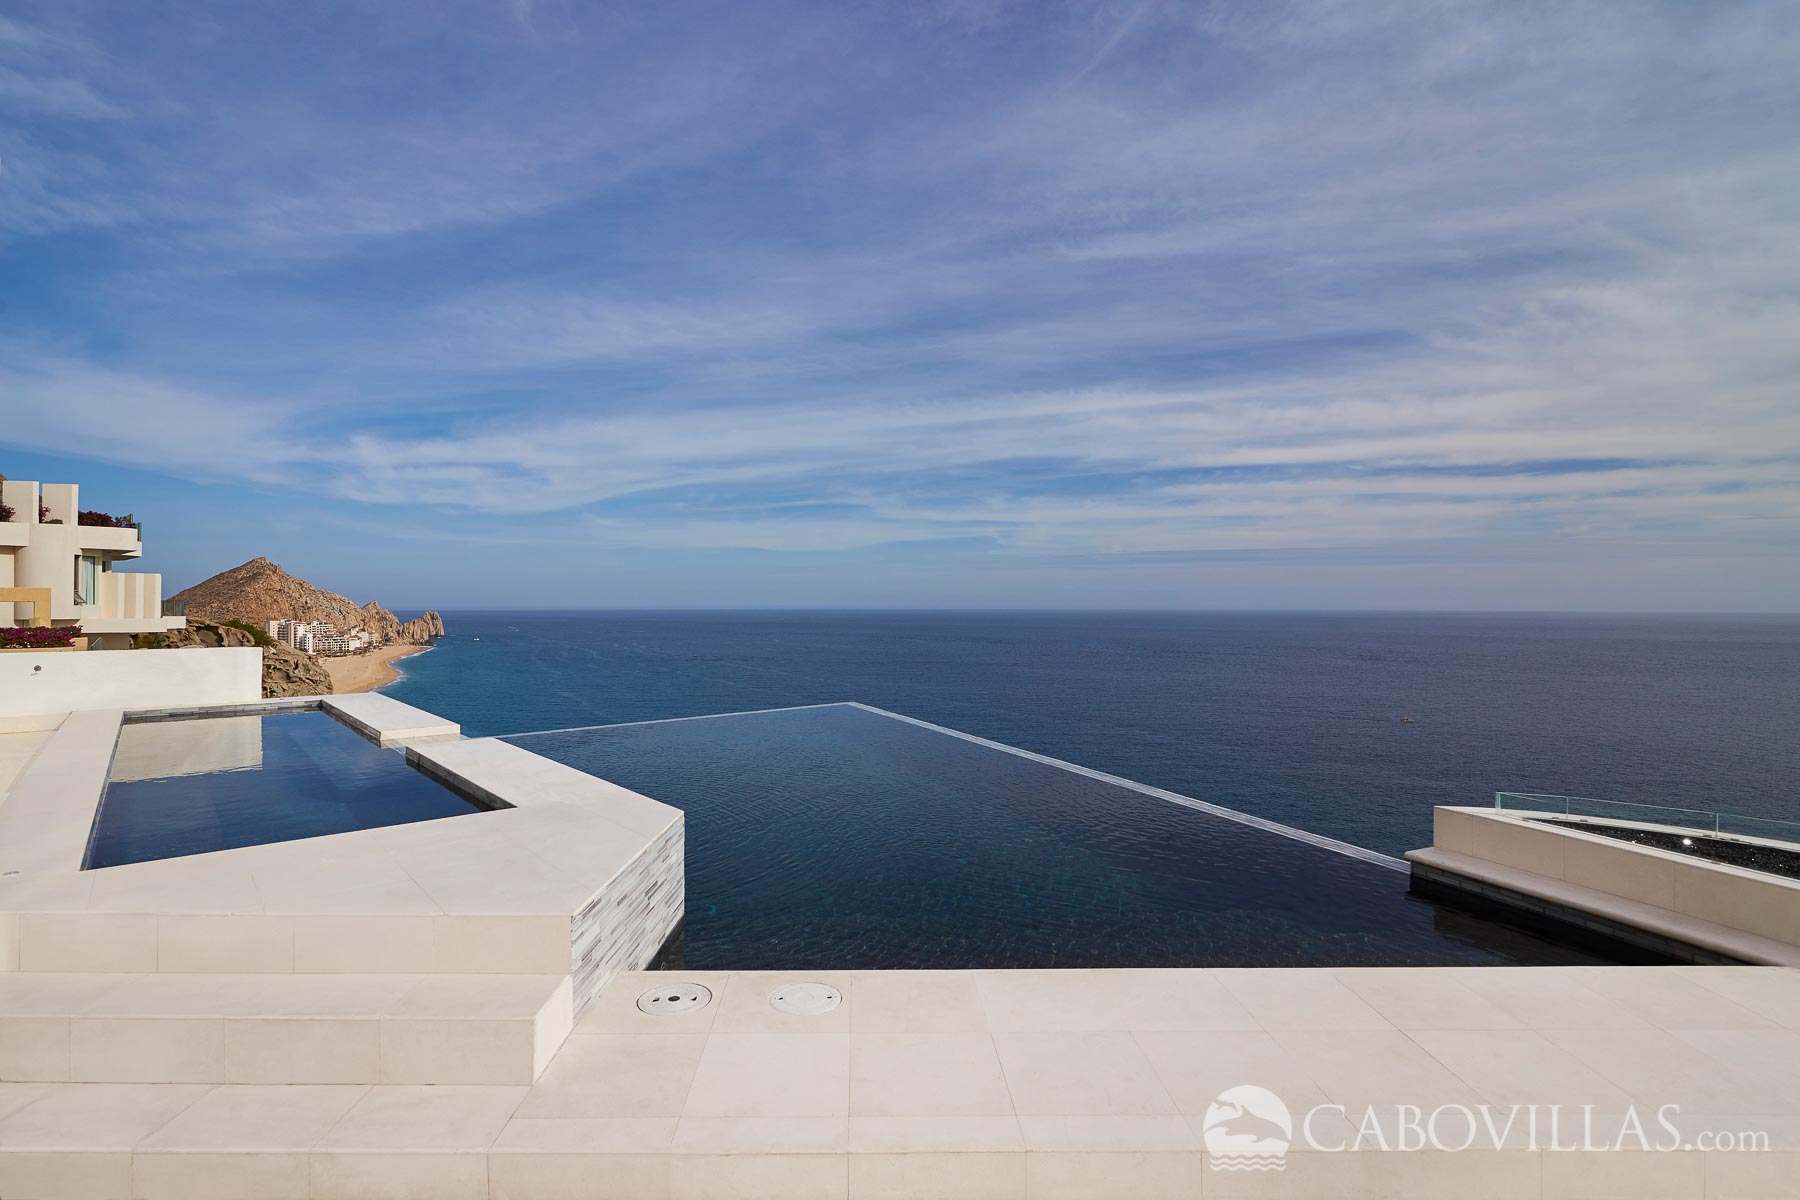 Luxury Vacation rentals in Cabo San Lucas Mexico